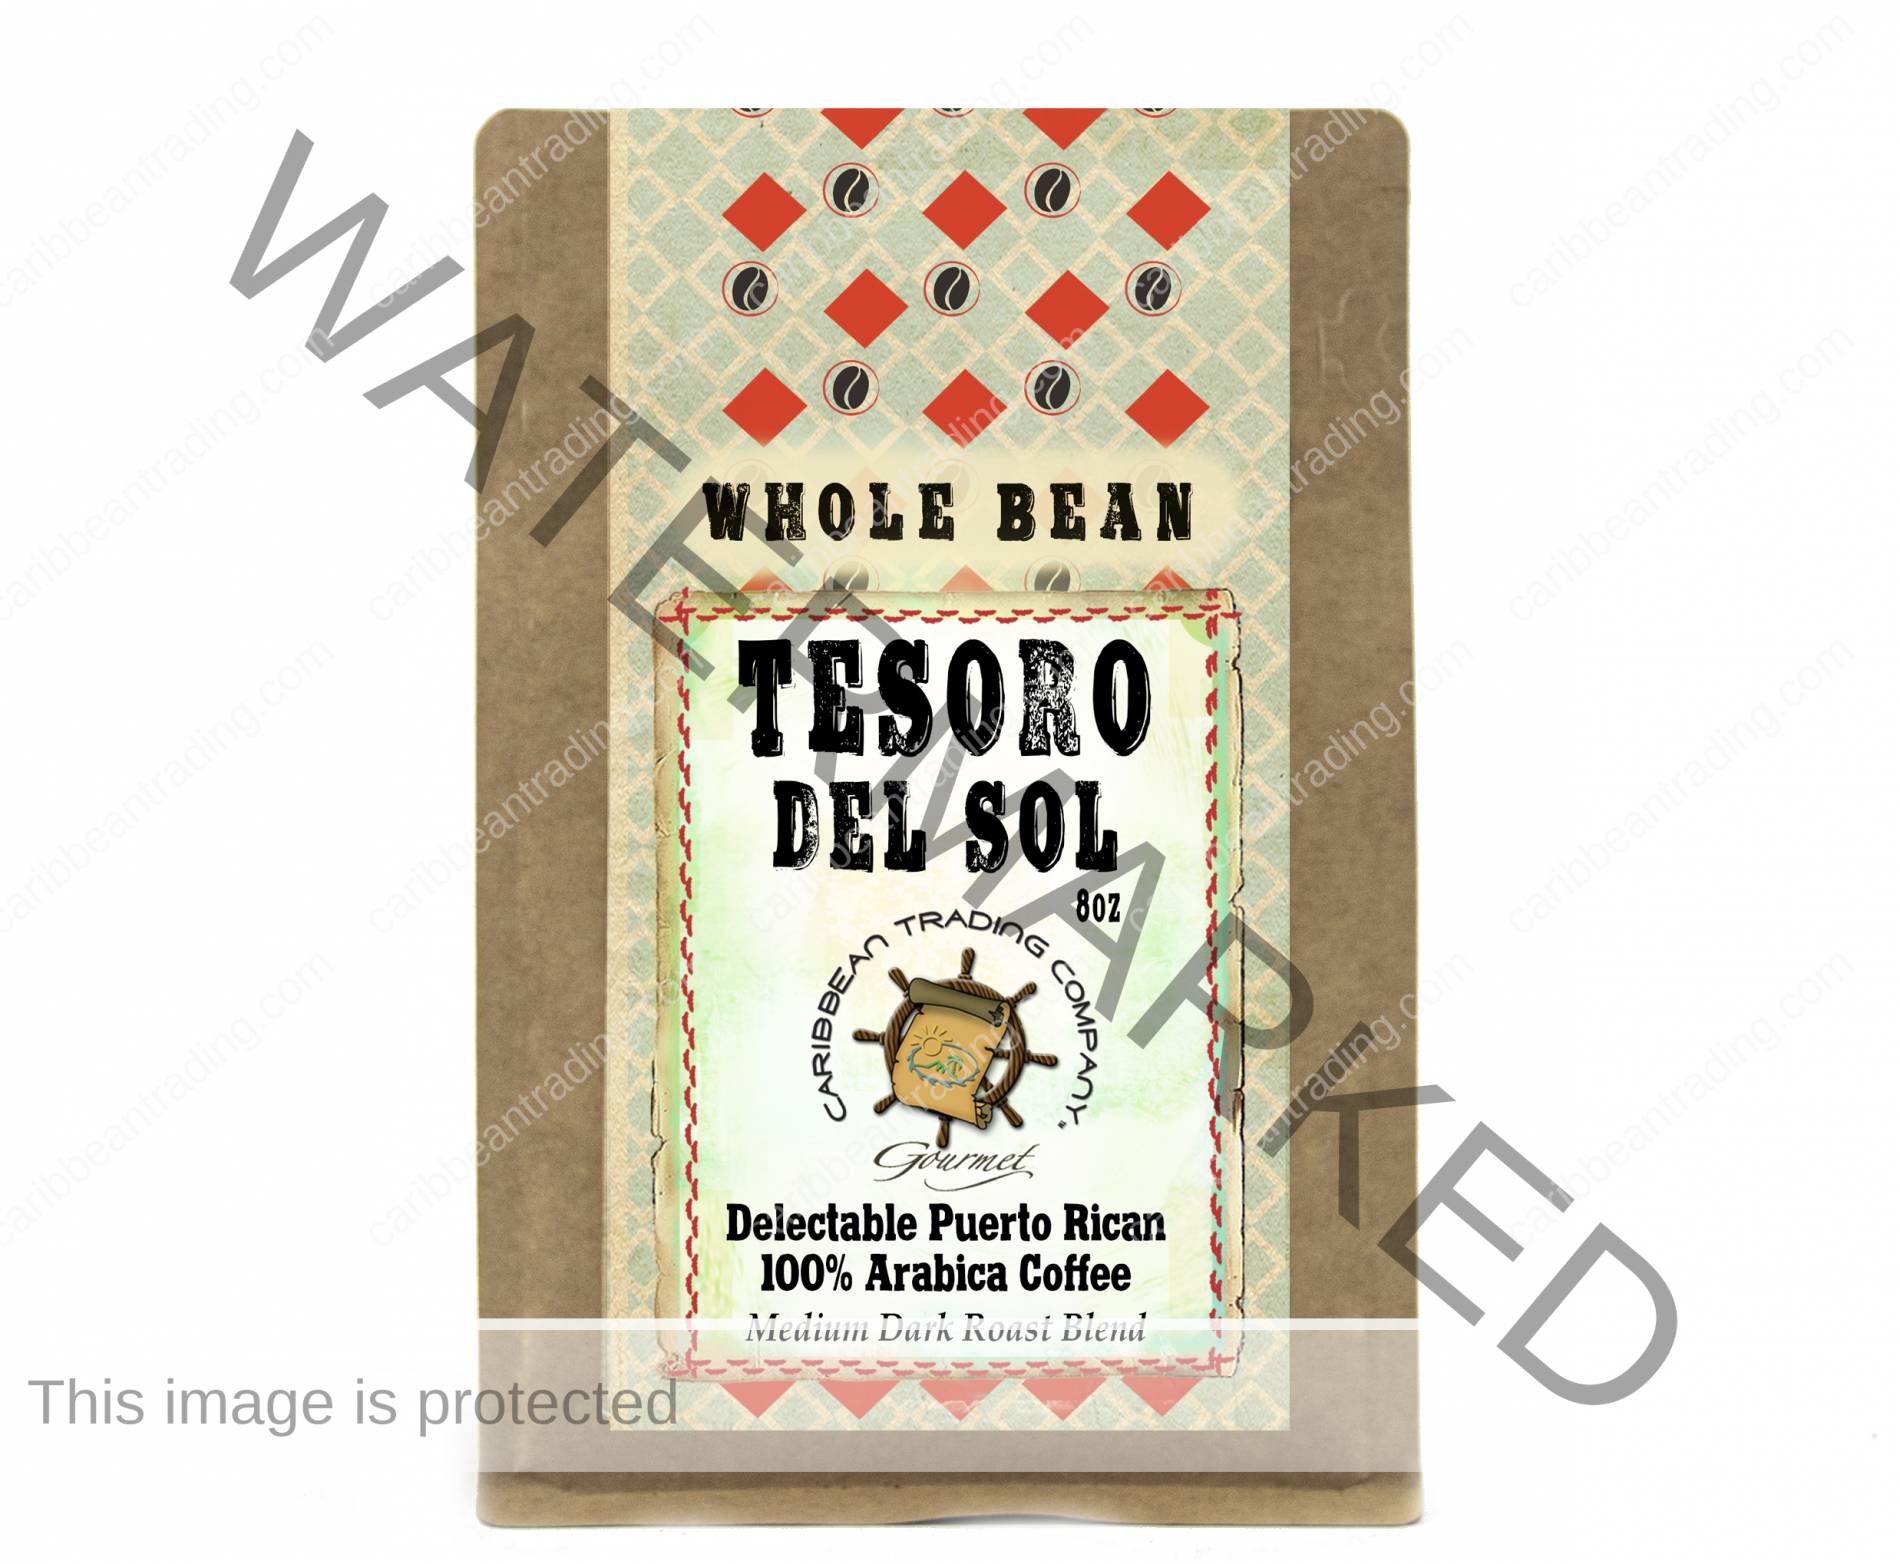 Tesoro del Sol Coffee  - Whole Bean